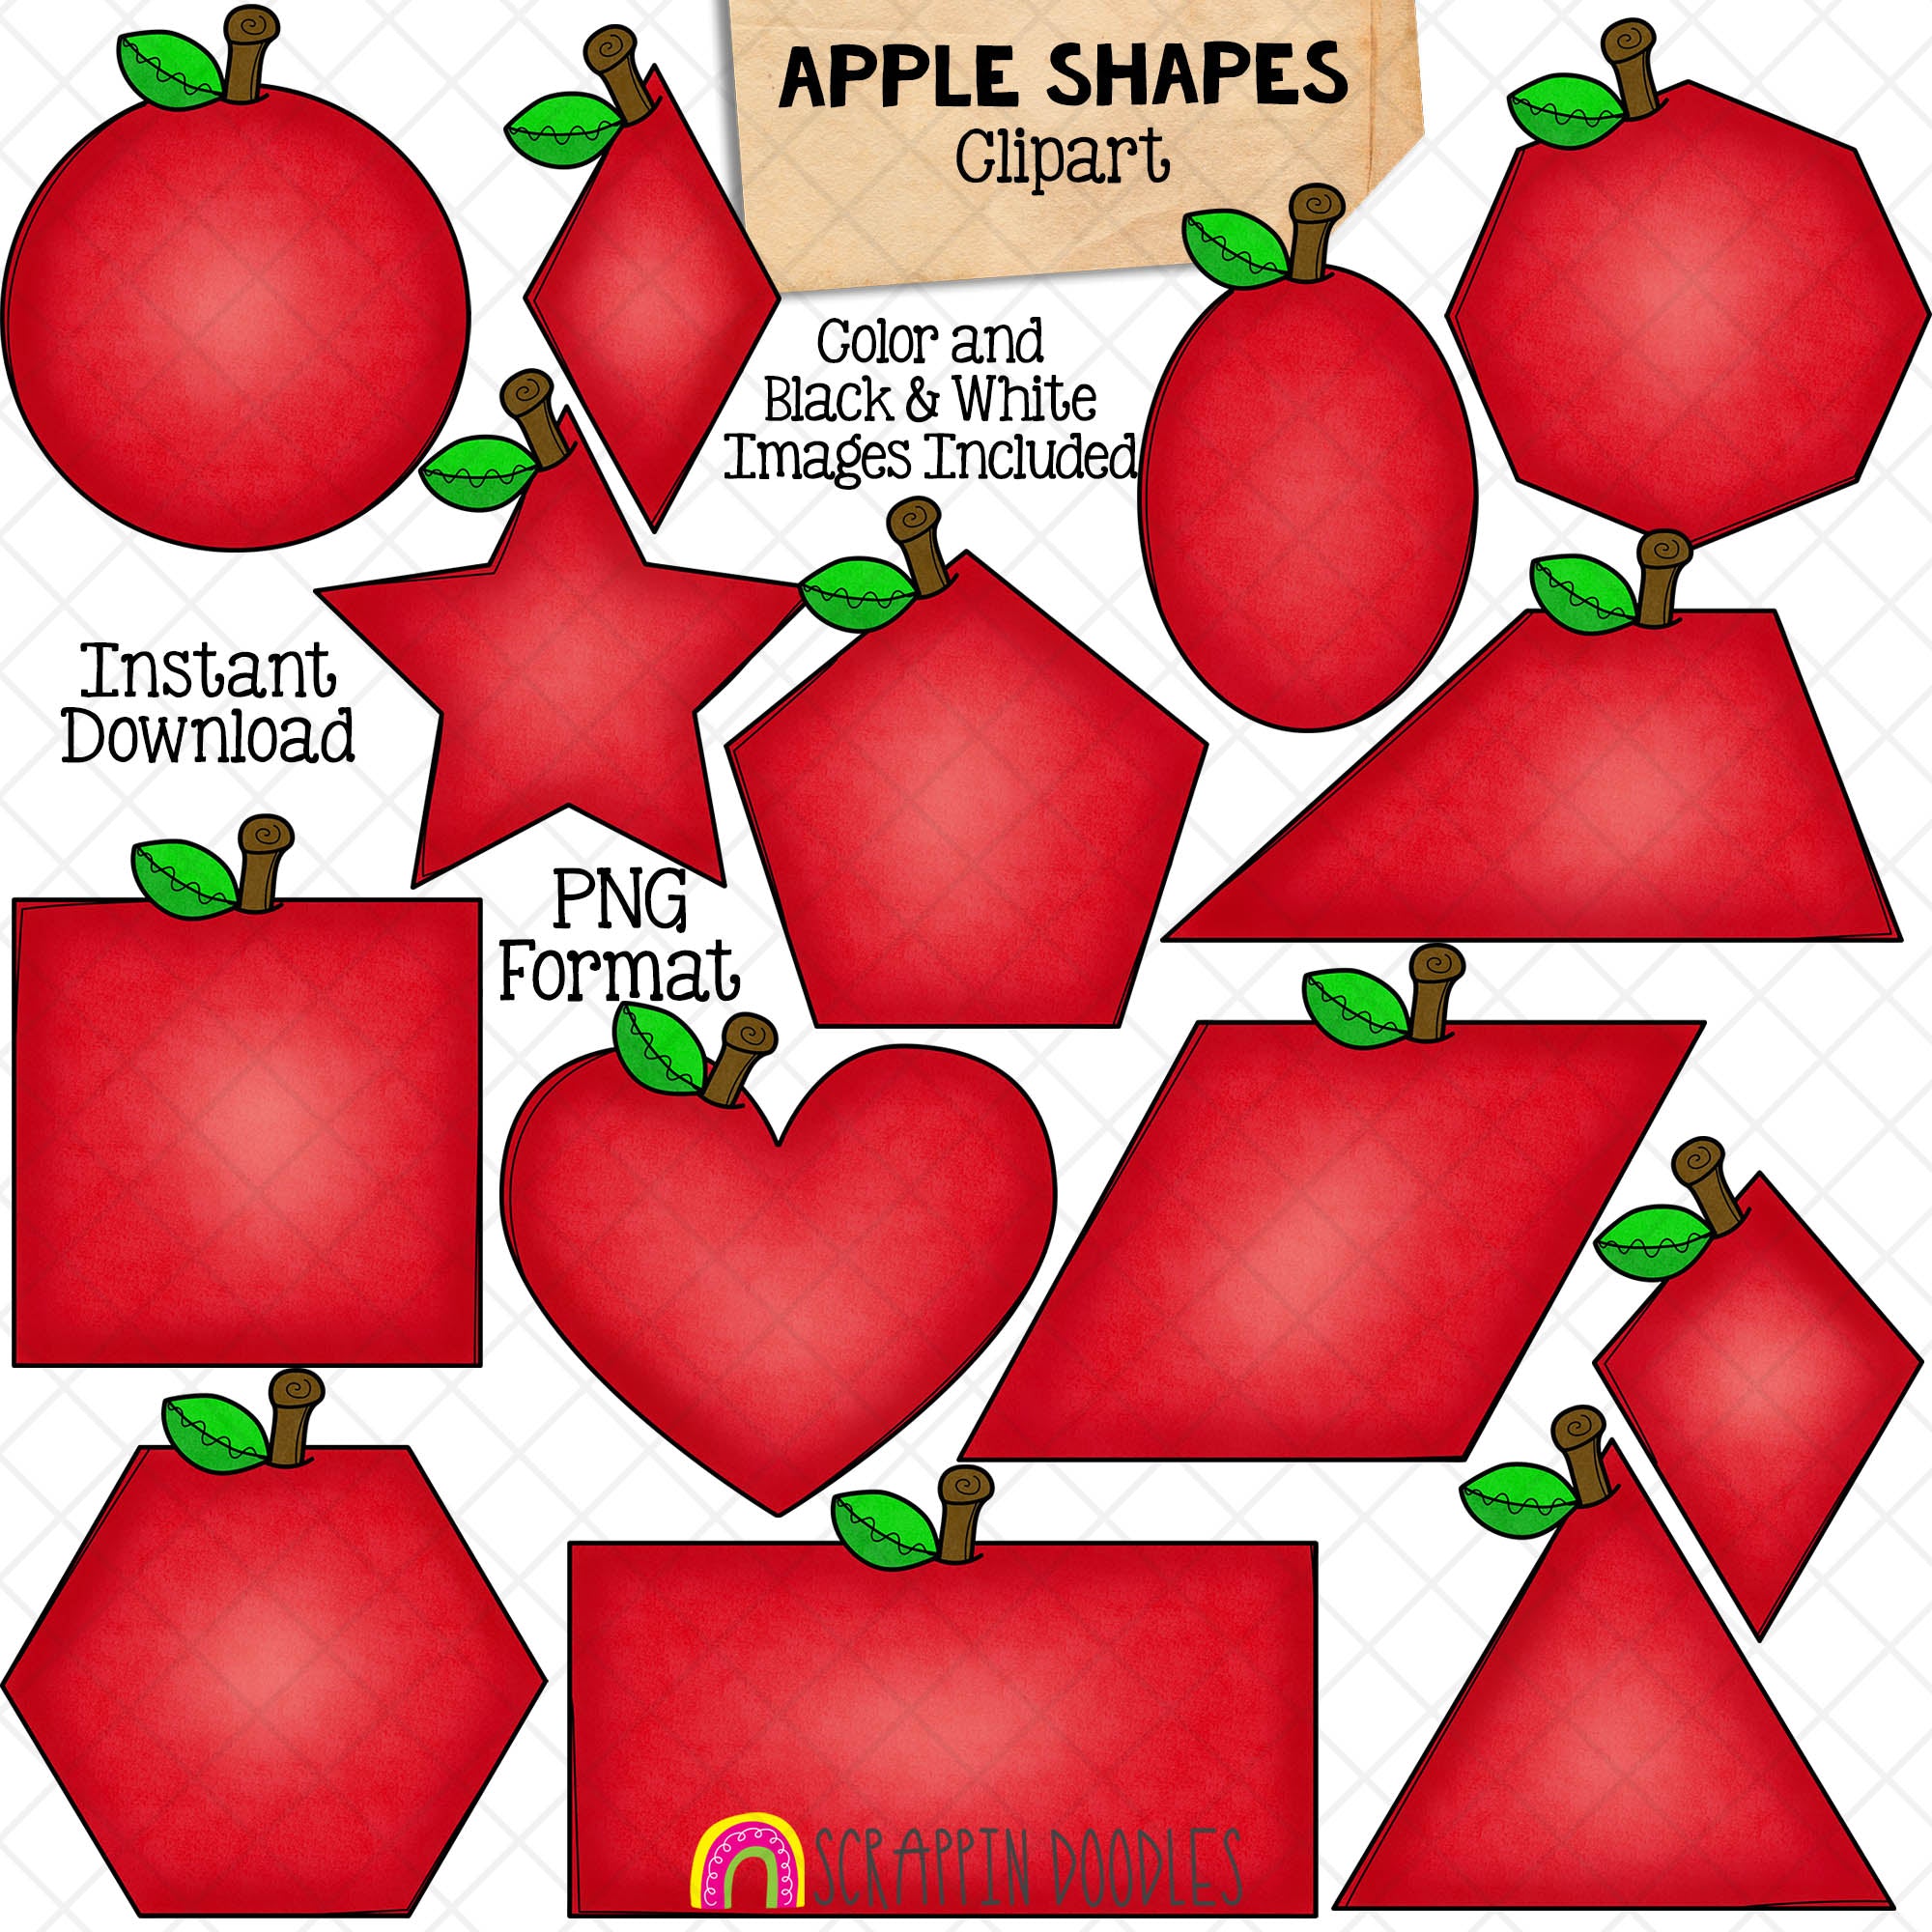 Shapes Clip Art Real Life Rectangle Shapes Clipart Geometric Shapes 3D  Shape Clipart Math Clipart Shape Graphics 2D Shapes 